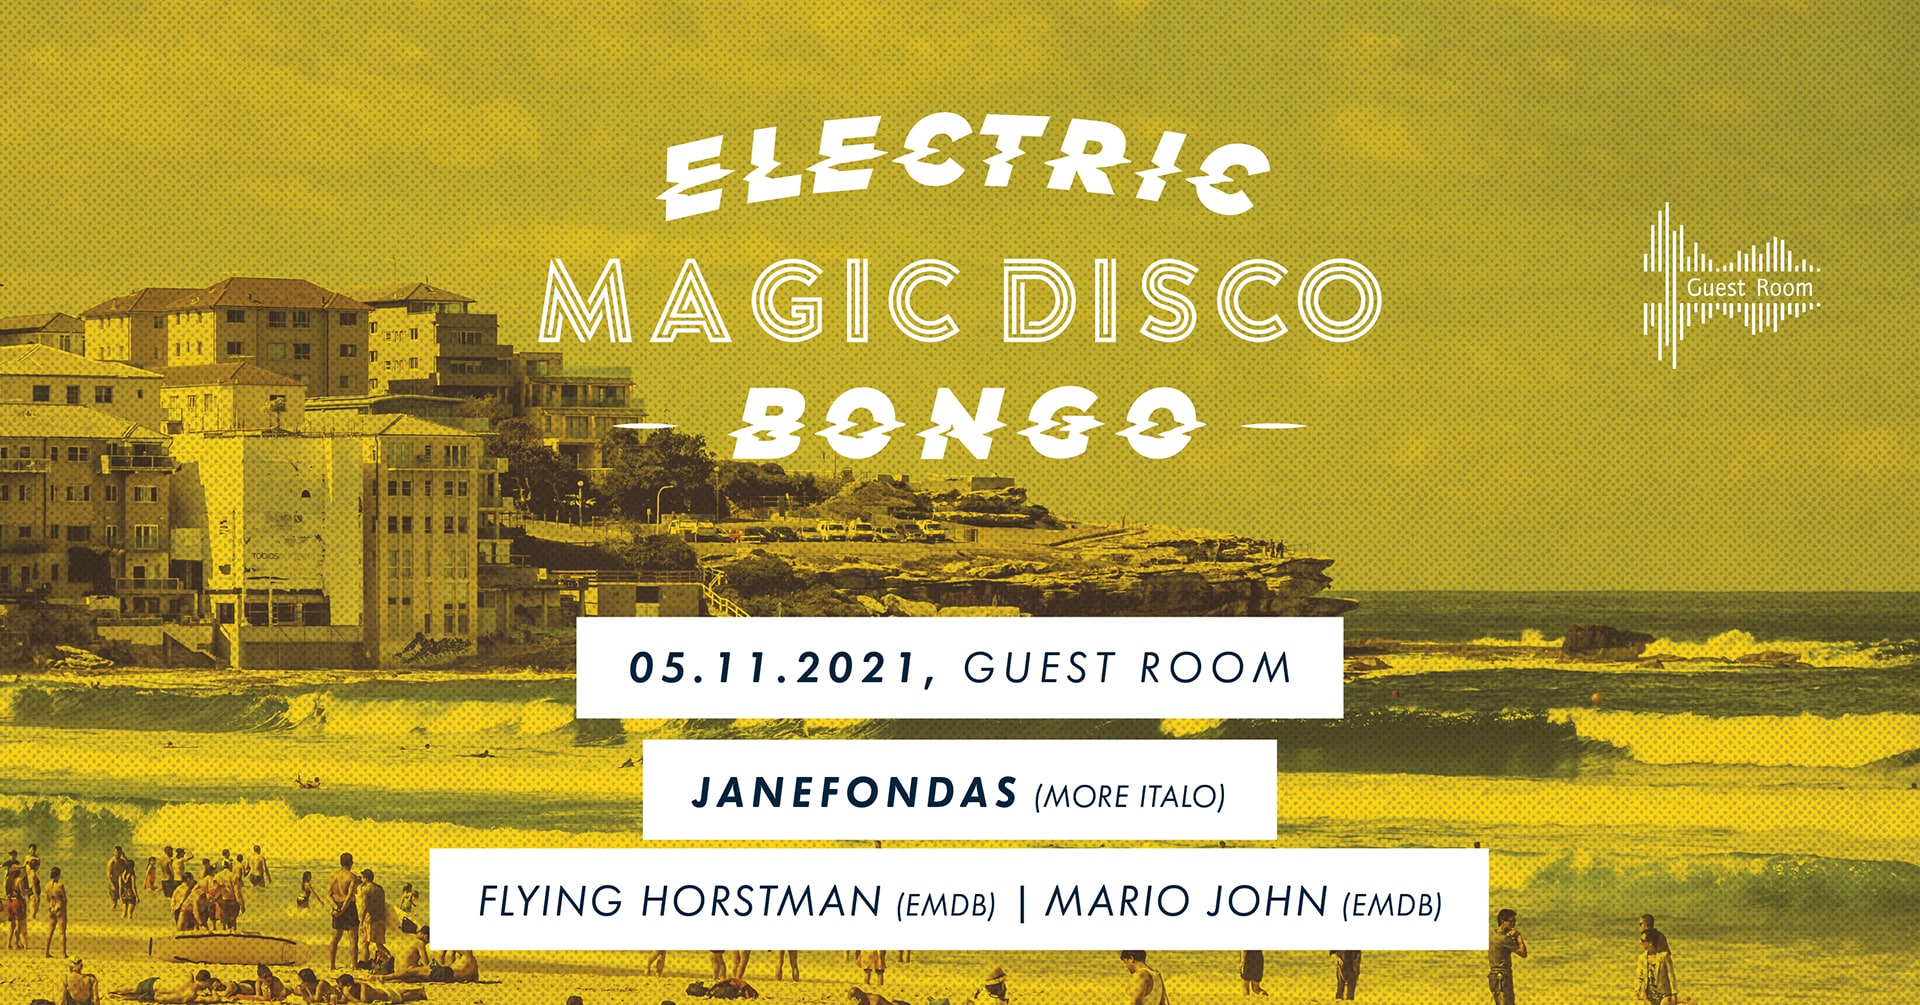 Electric Magic Disco Bongo w/ Janefondasim guestroom in Graz